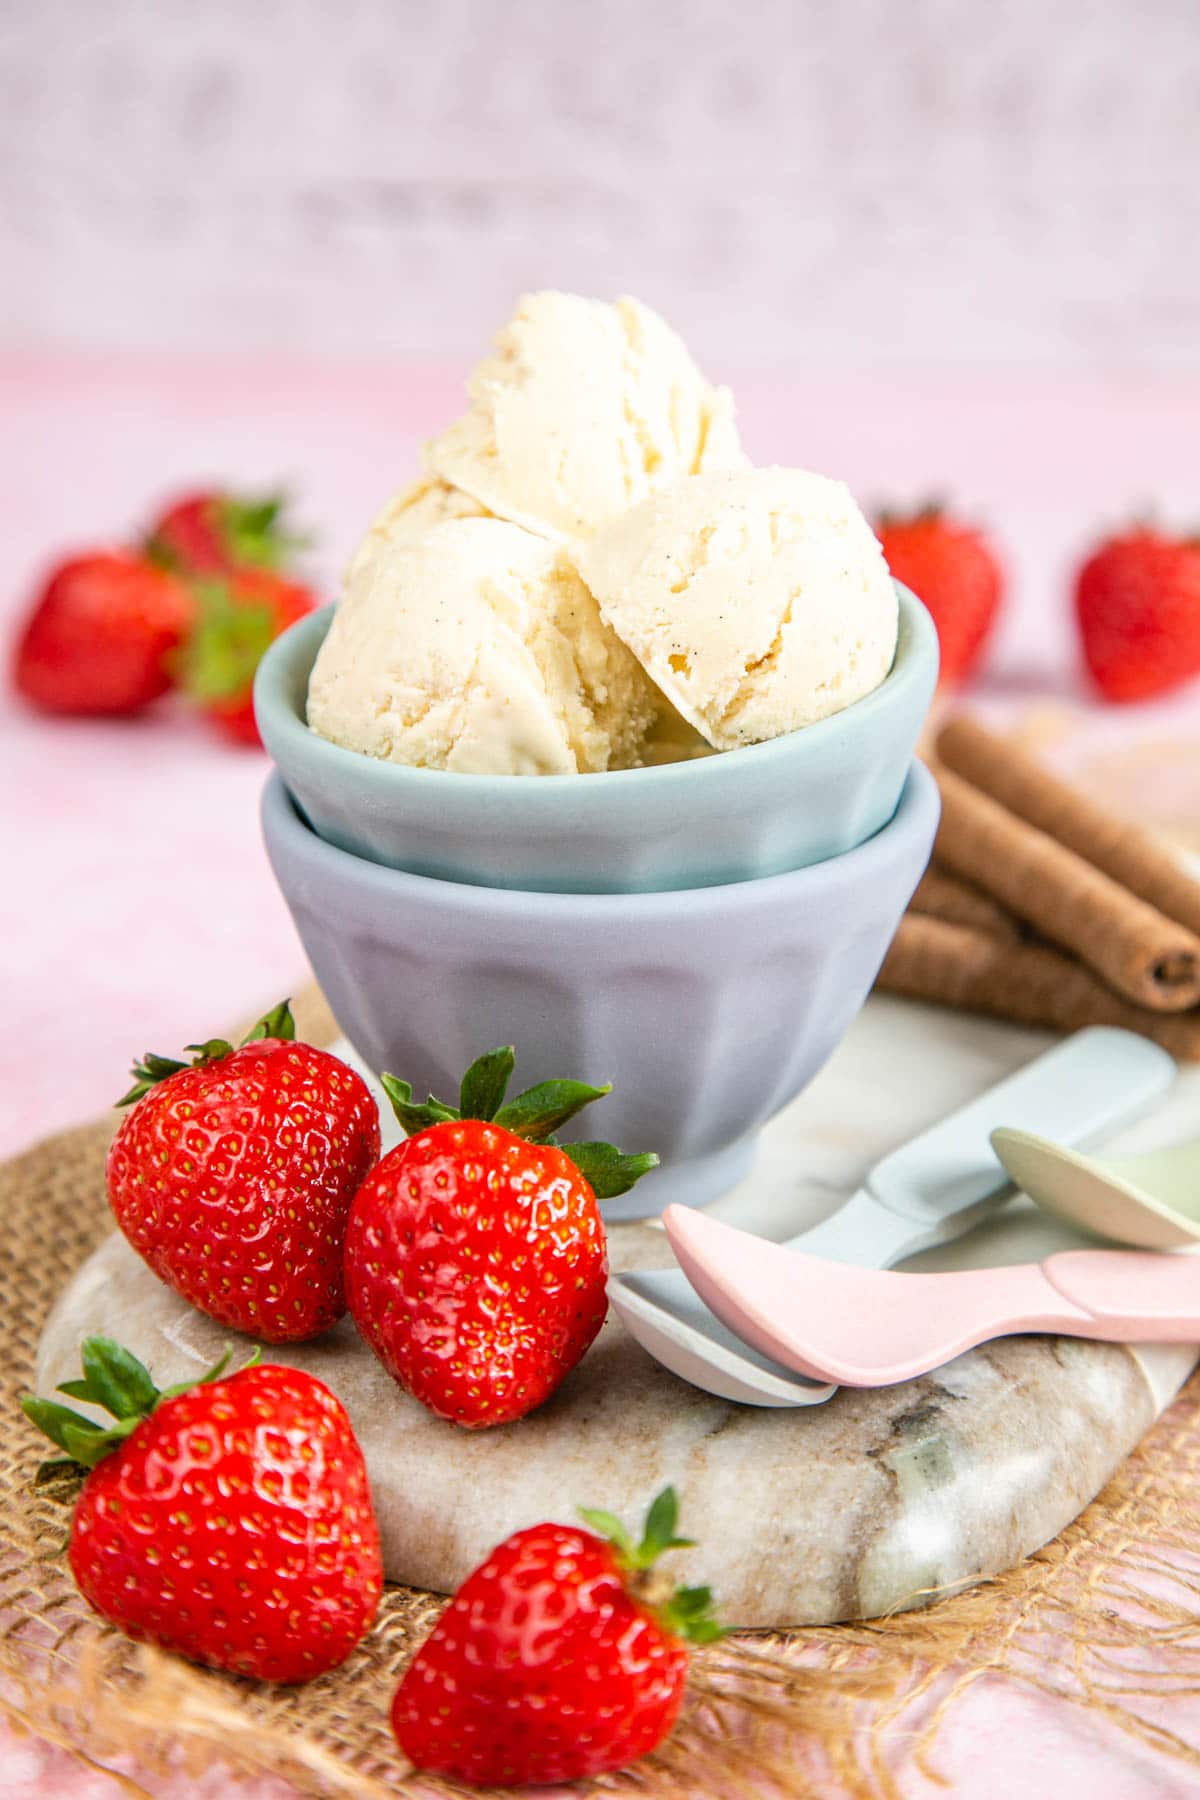 Delicious vanilla ice cream presented in a pretty bowl, ready to eat.